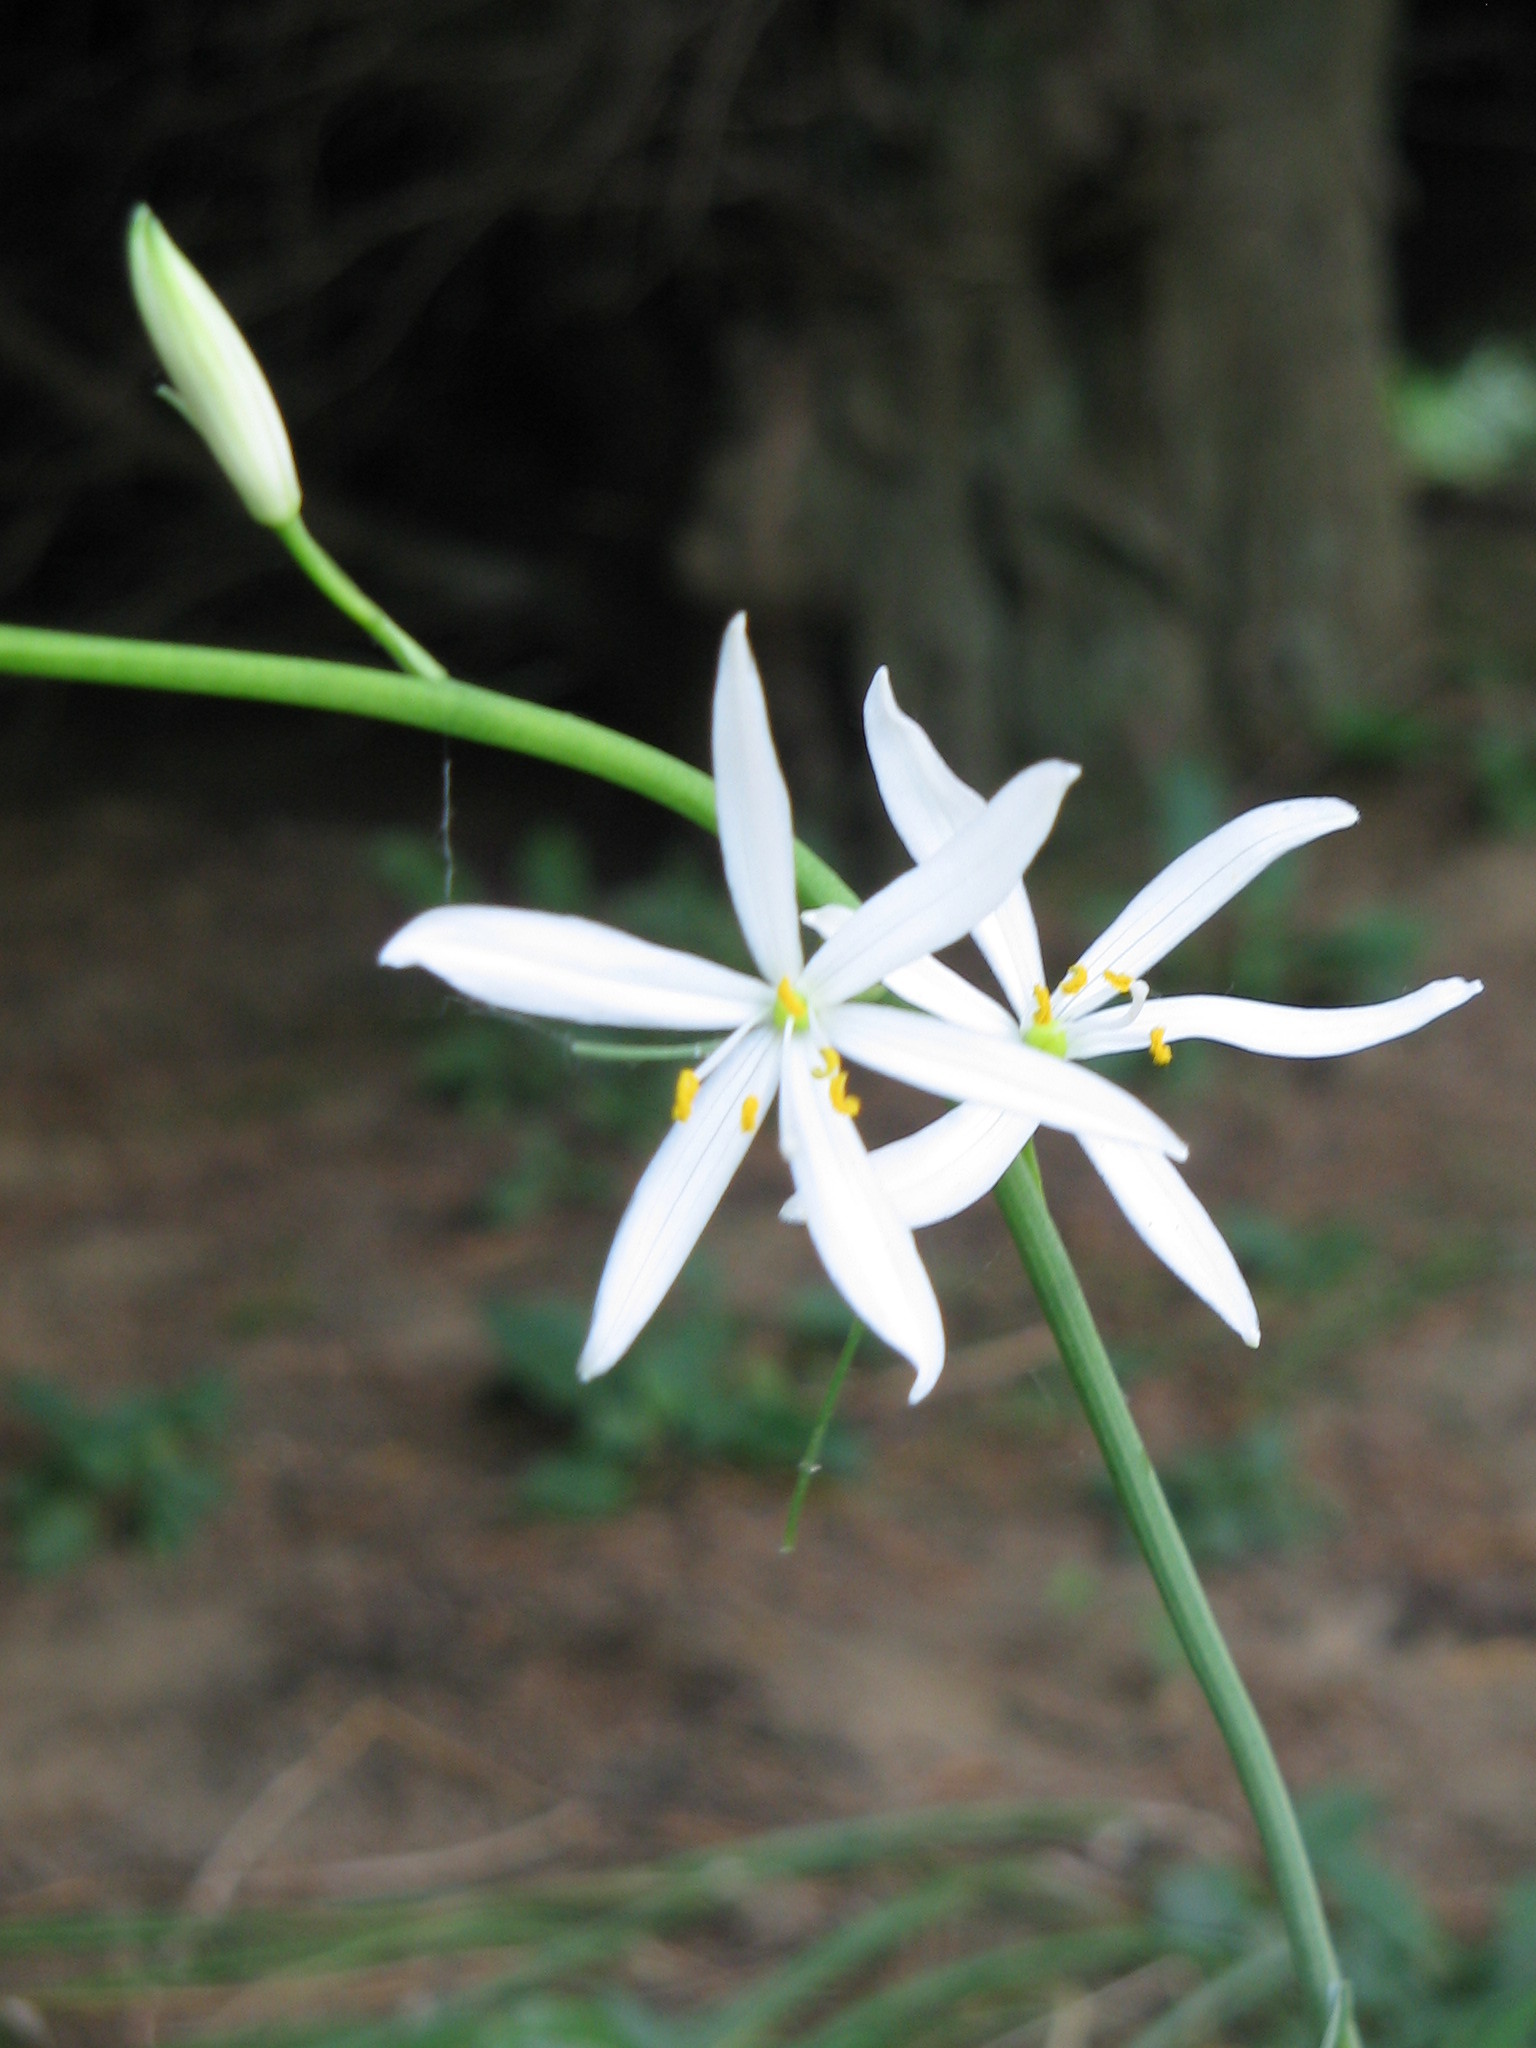 Anthericum liliago (rights holder: Meneerke bloem)